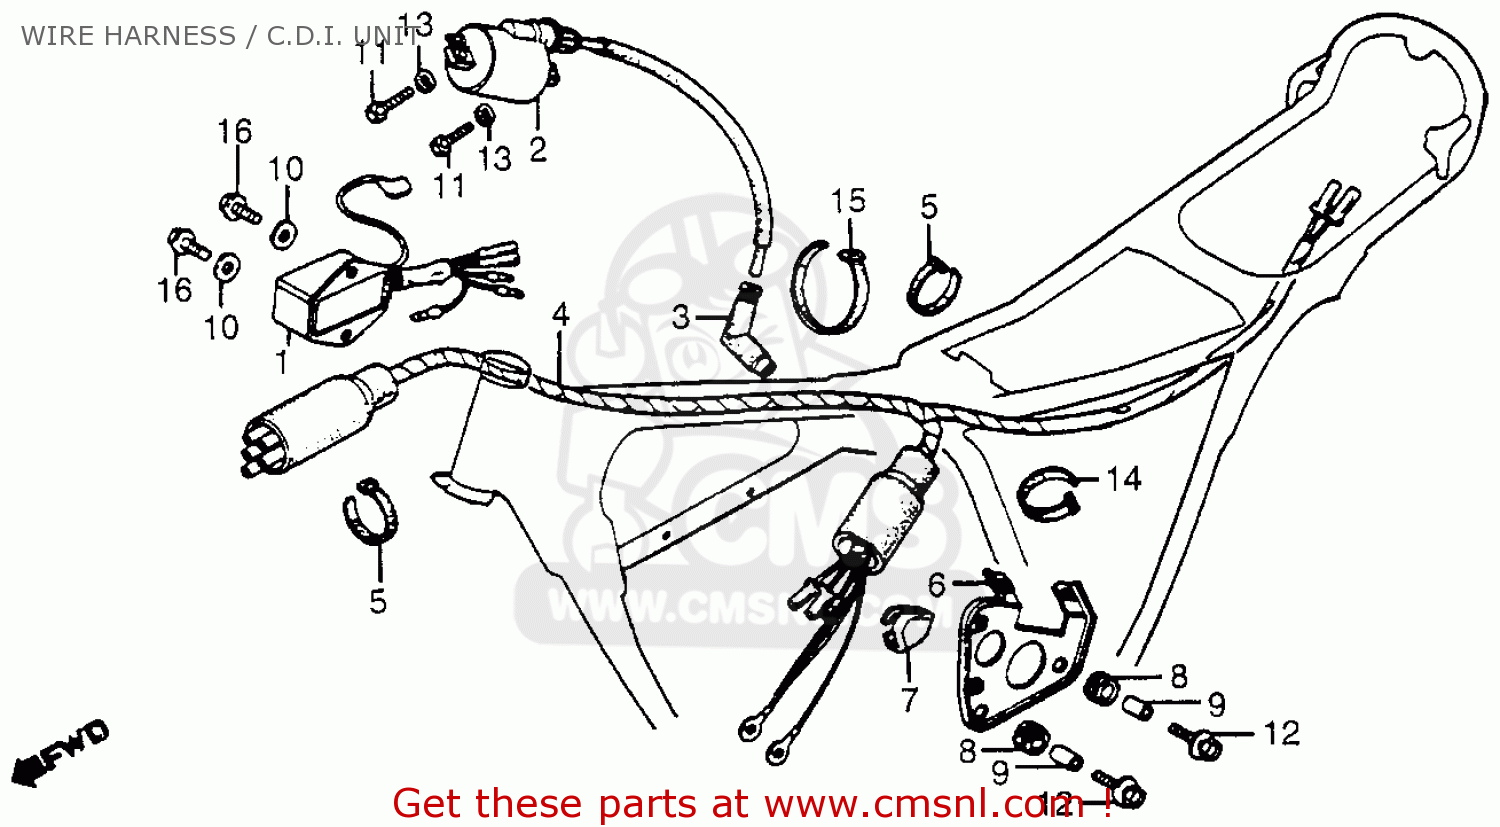 Honda XR200R 1982 (C) USA WIRE HARNESS / C.D.I. UNIT - buy ... 1984 honda xr200 wiring diagrams 